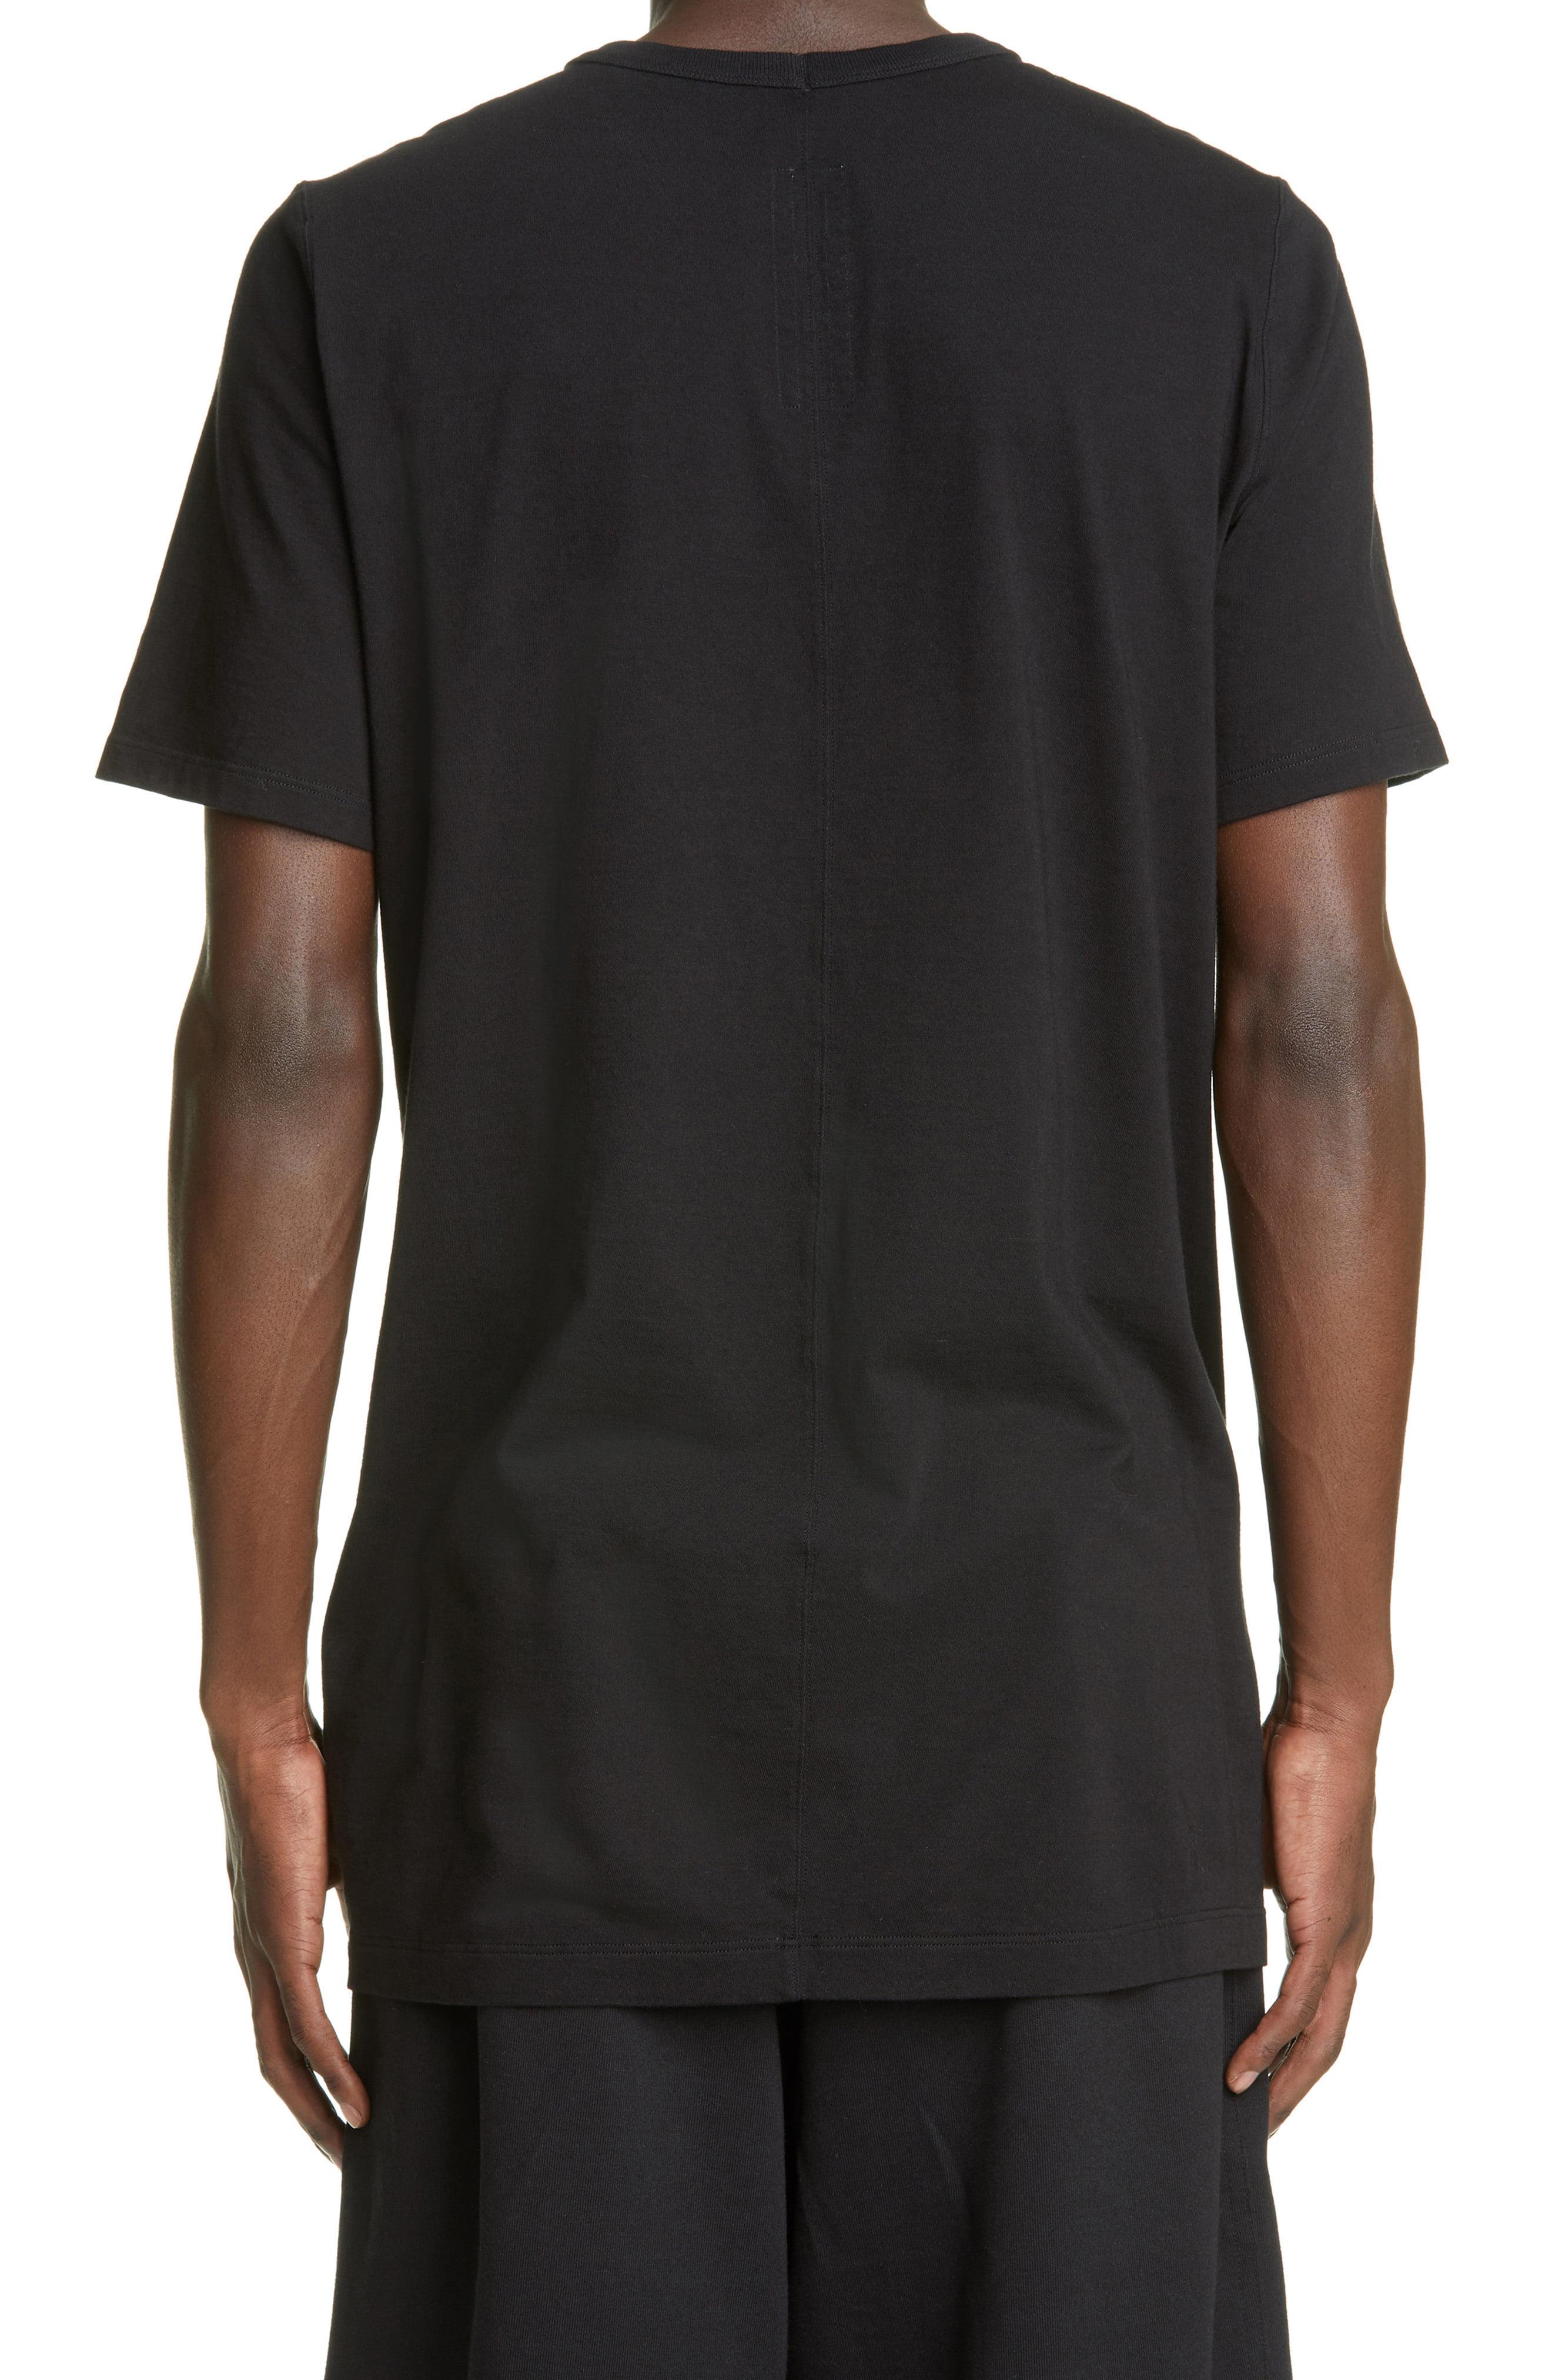 Rick Owens Cotton Level T-shirt in Black for Men - Lyst